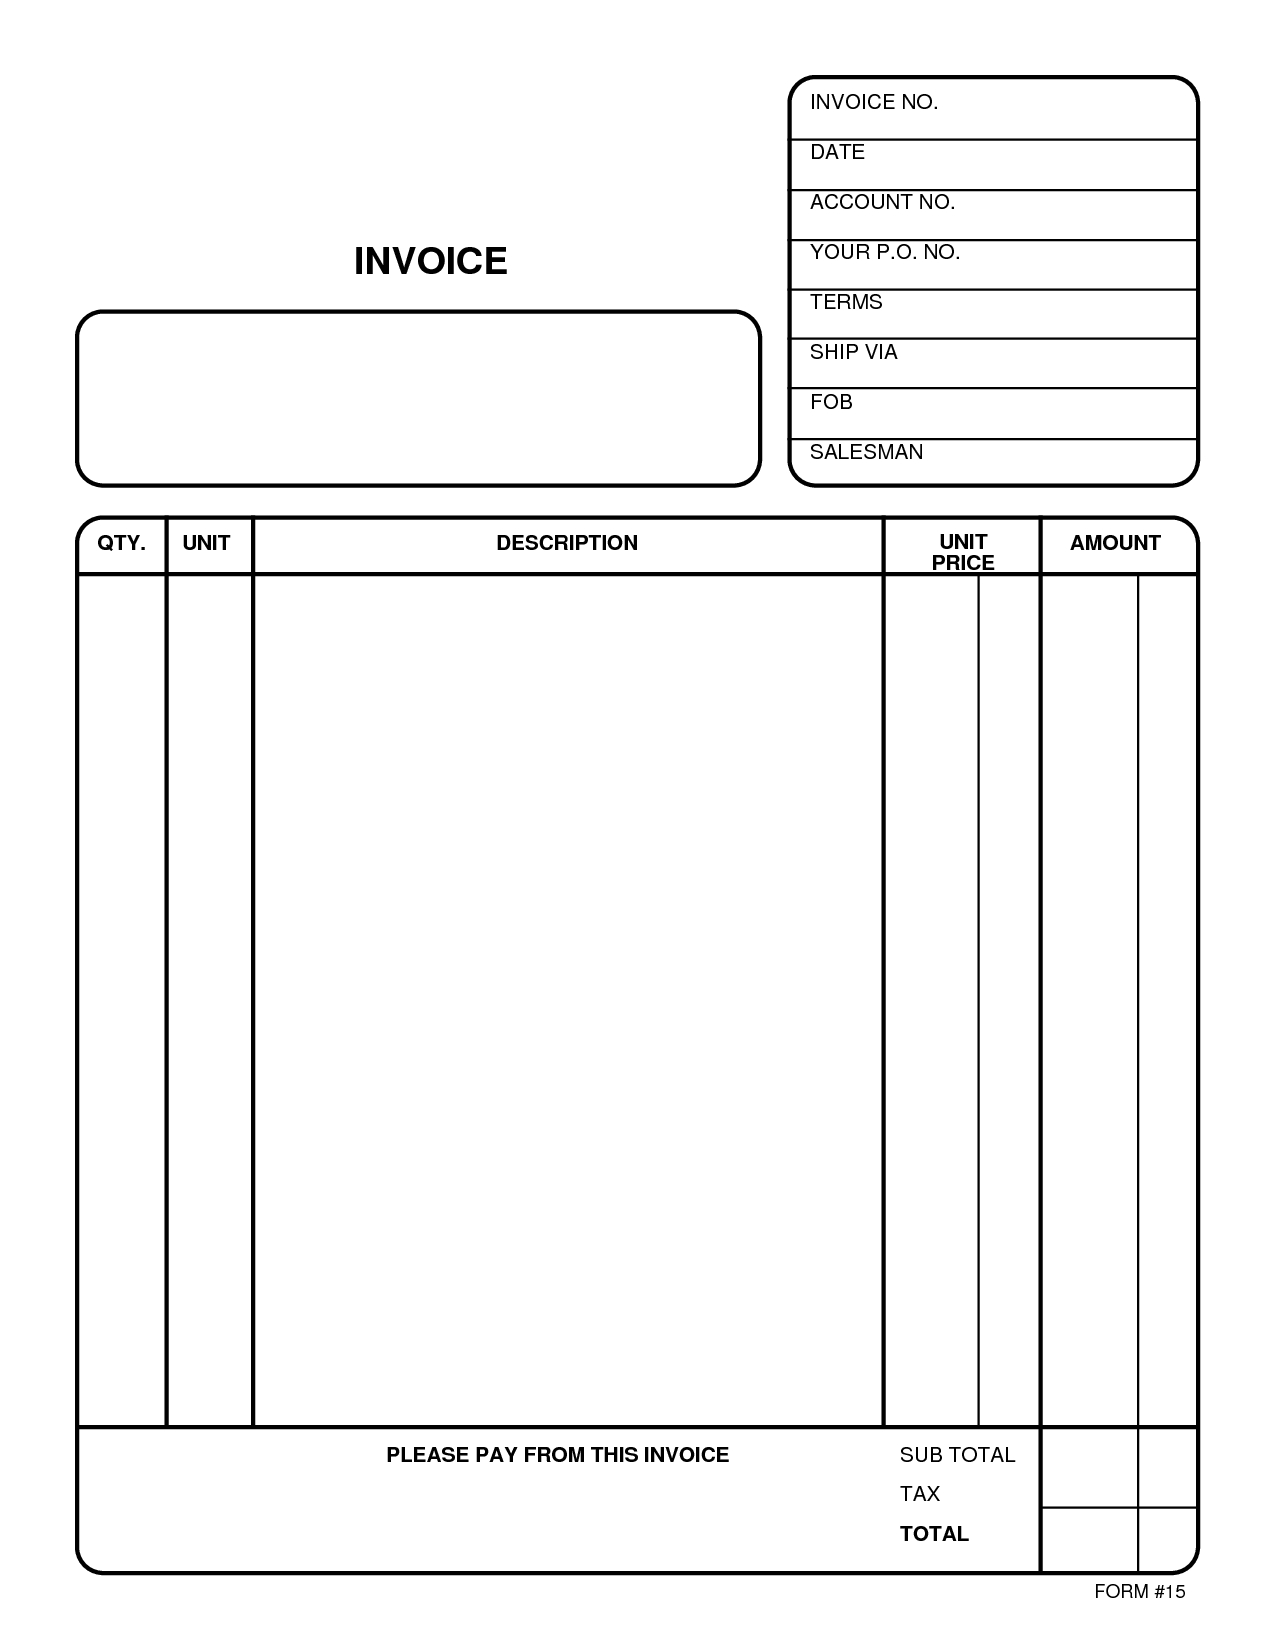 invoice template generator invoice generator online invoice make a invoice online free